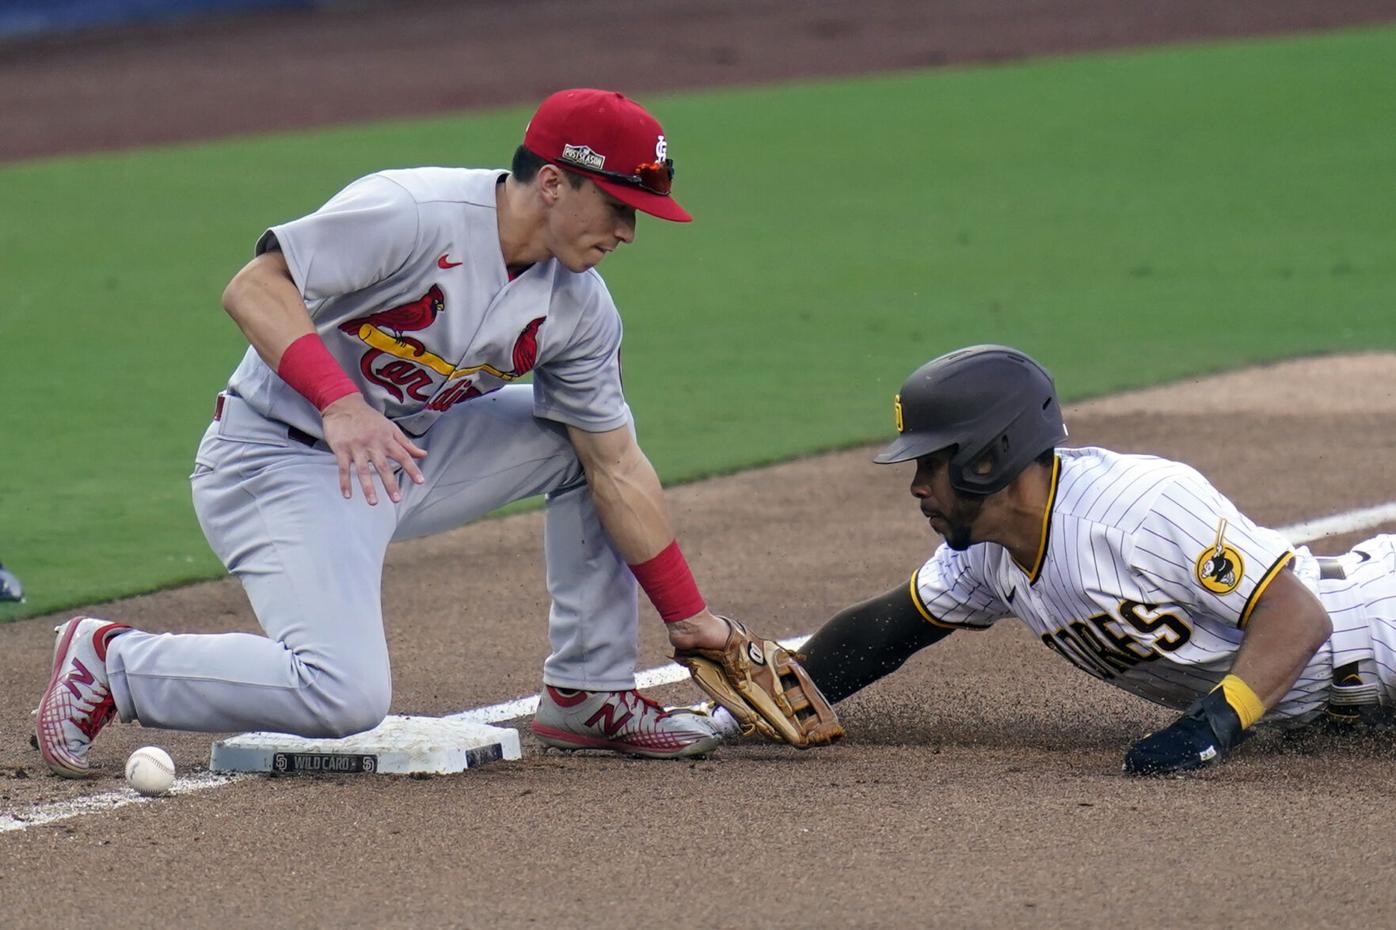 Paul Goldschmidt, Cardinals win in Padres' return to playoffs